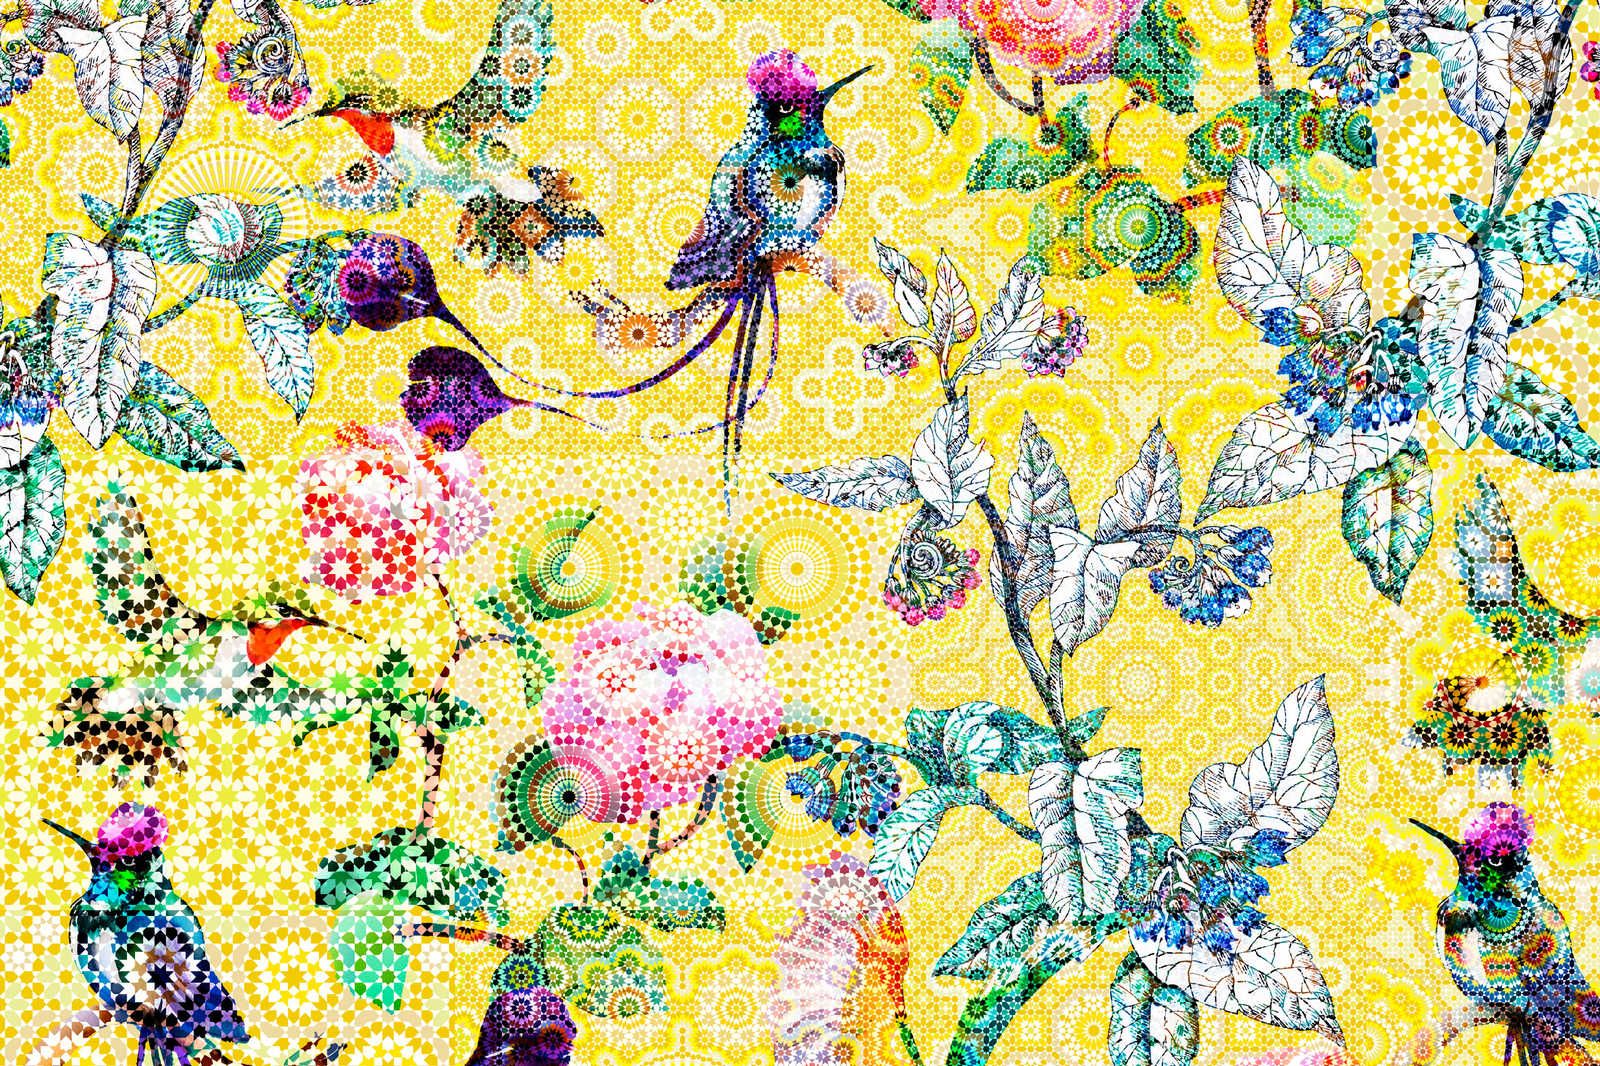             Leinwandbild exotisches Blumen Mosaik – 1,20 m x 0,80 m
        